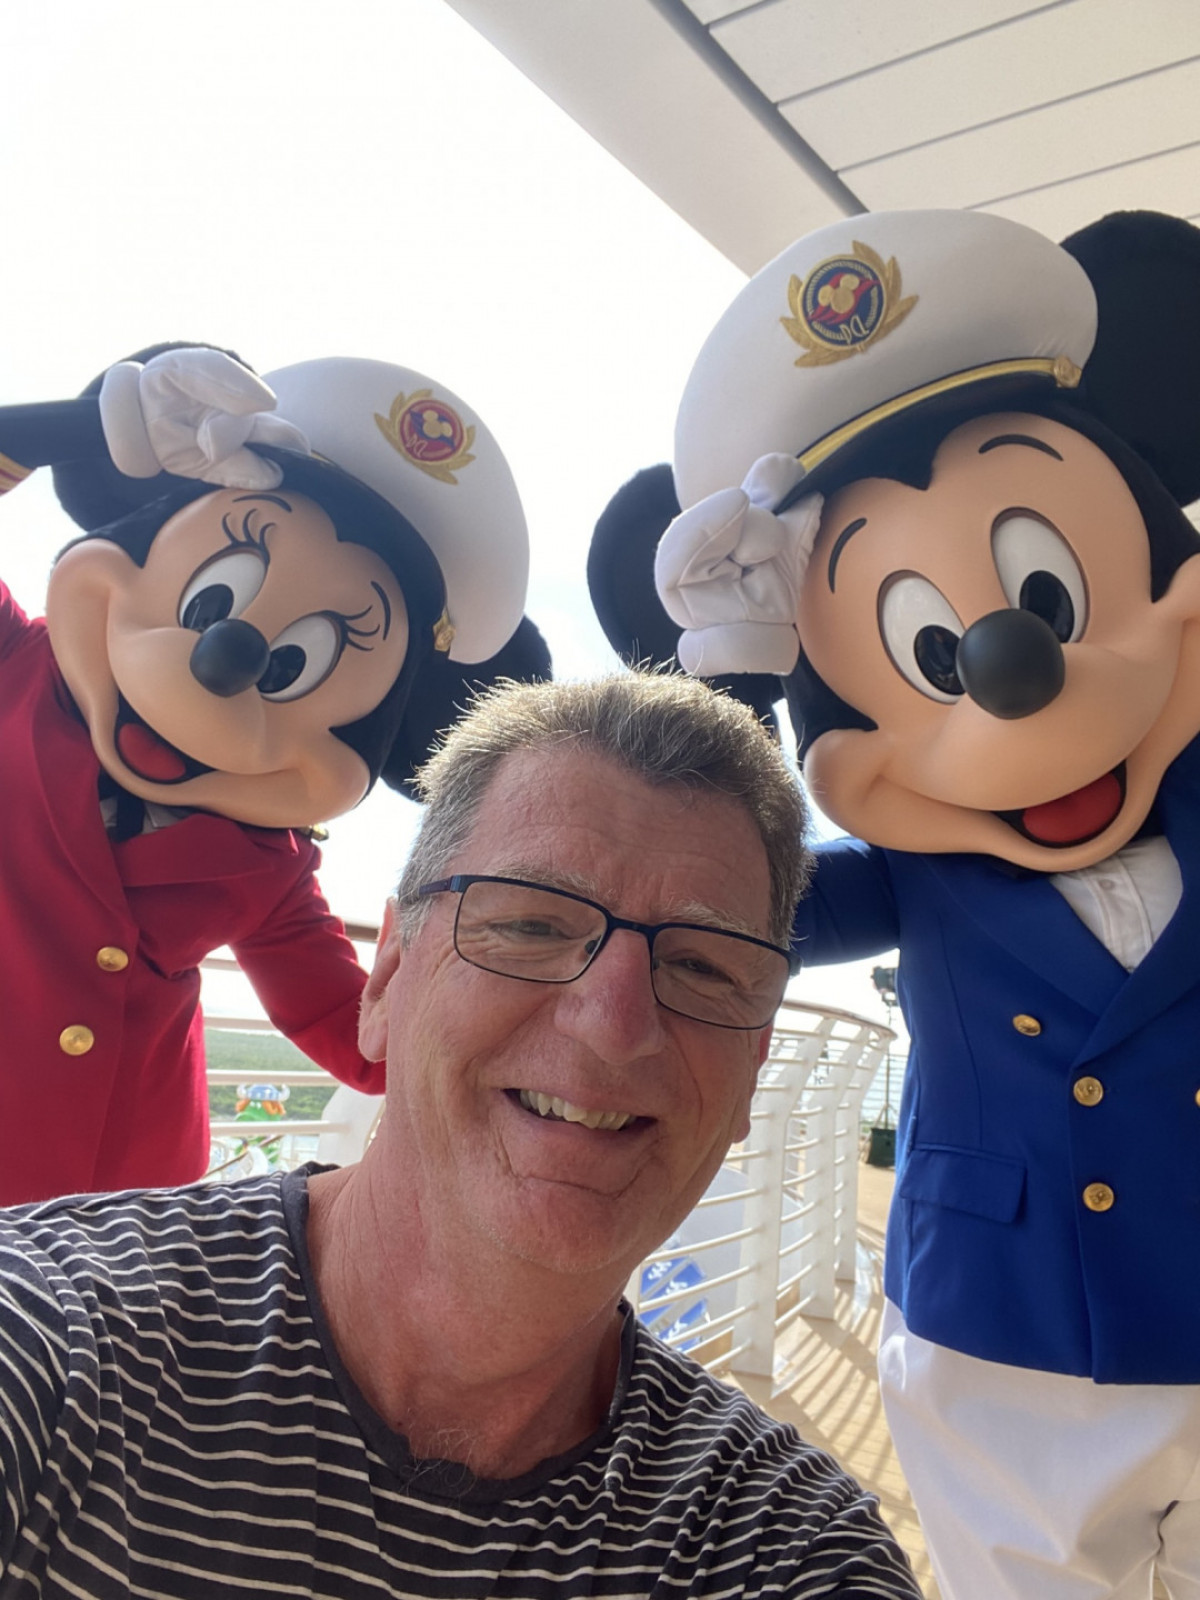 Disney Magic at Sea is coming to New Zealand 